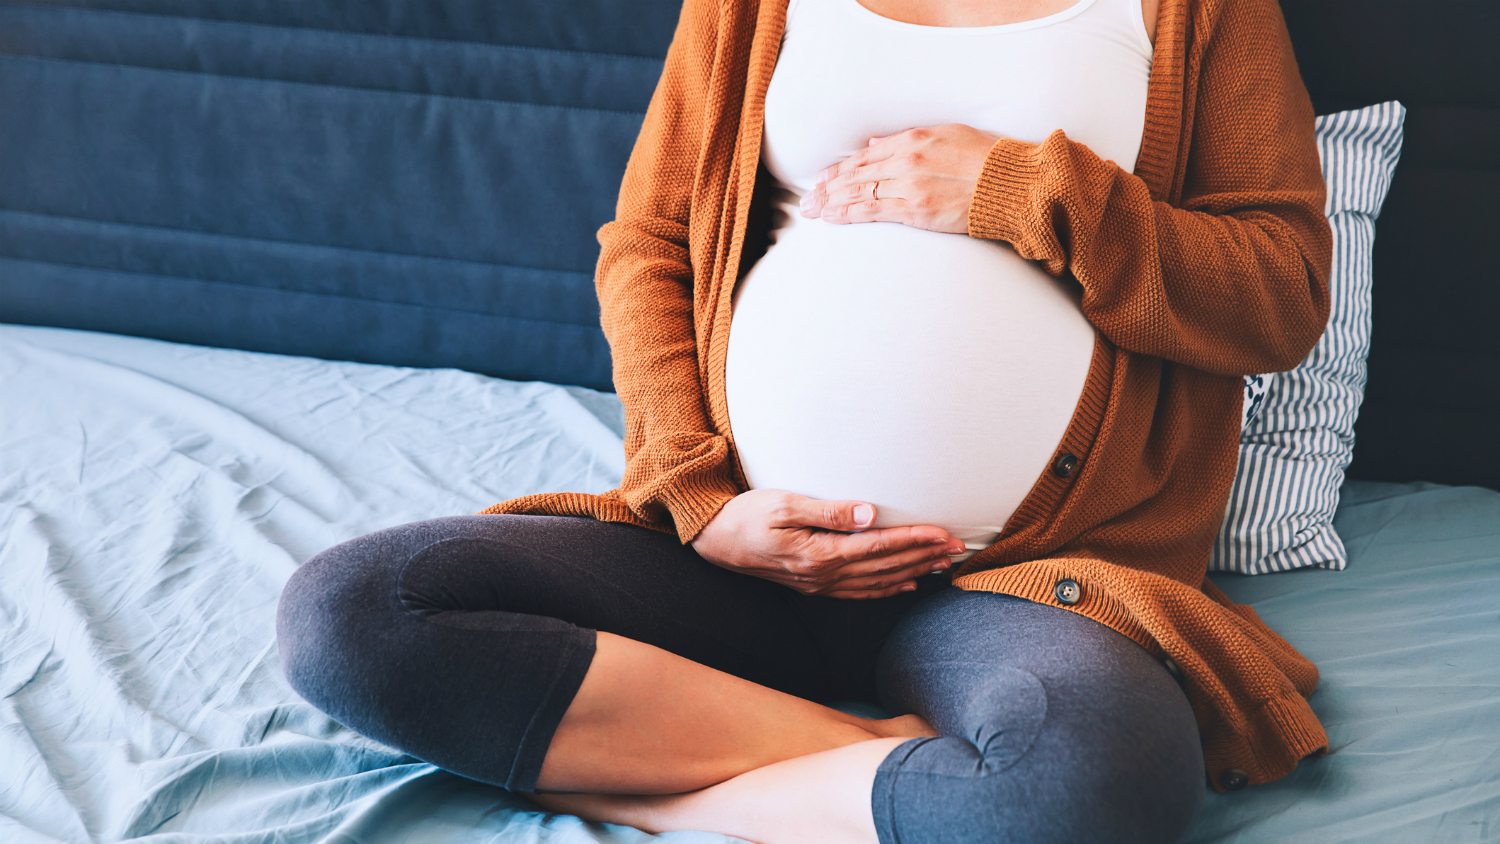 probiotics-in-pregnancy-supplementation-could-benefit-women-with-gestational-diabetes-thai-study.jpg